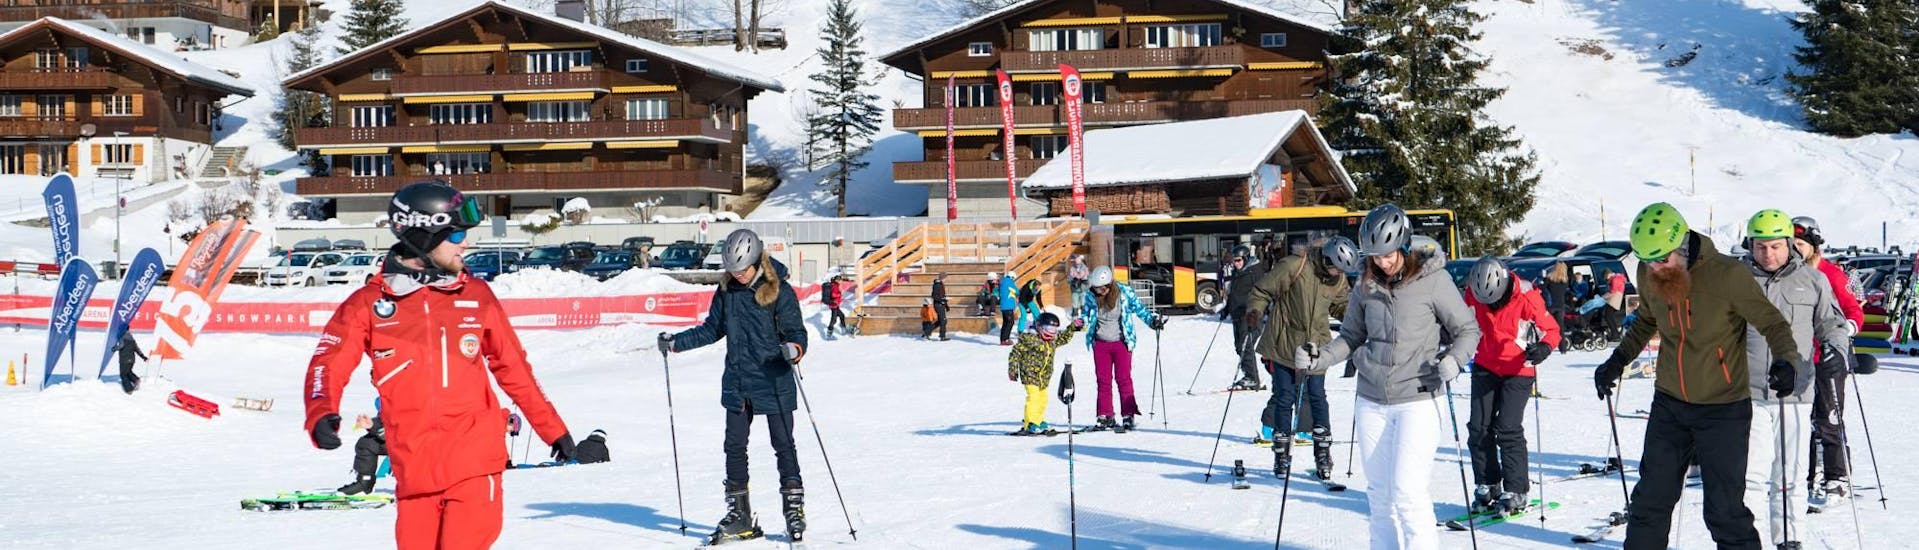 Clases de esquí para adultos a partir de 12 años para debutantes.